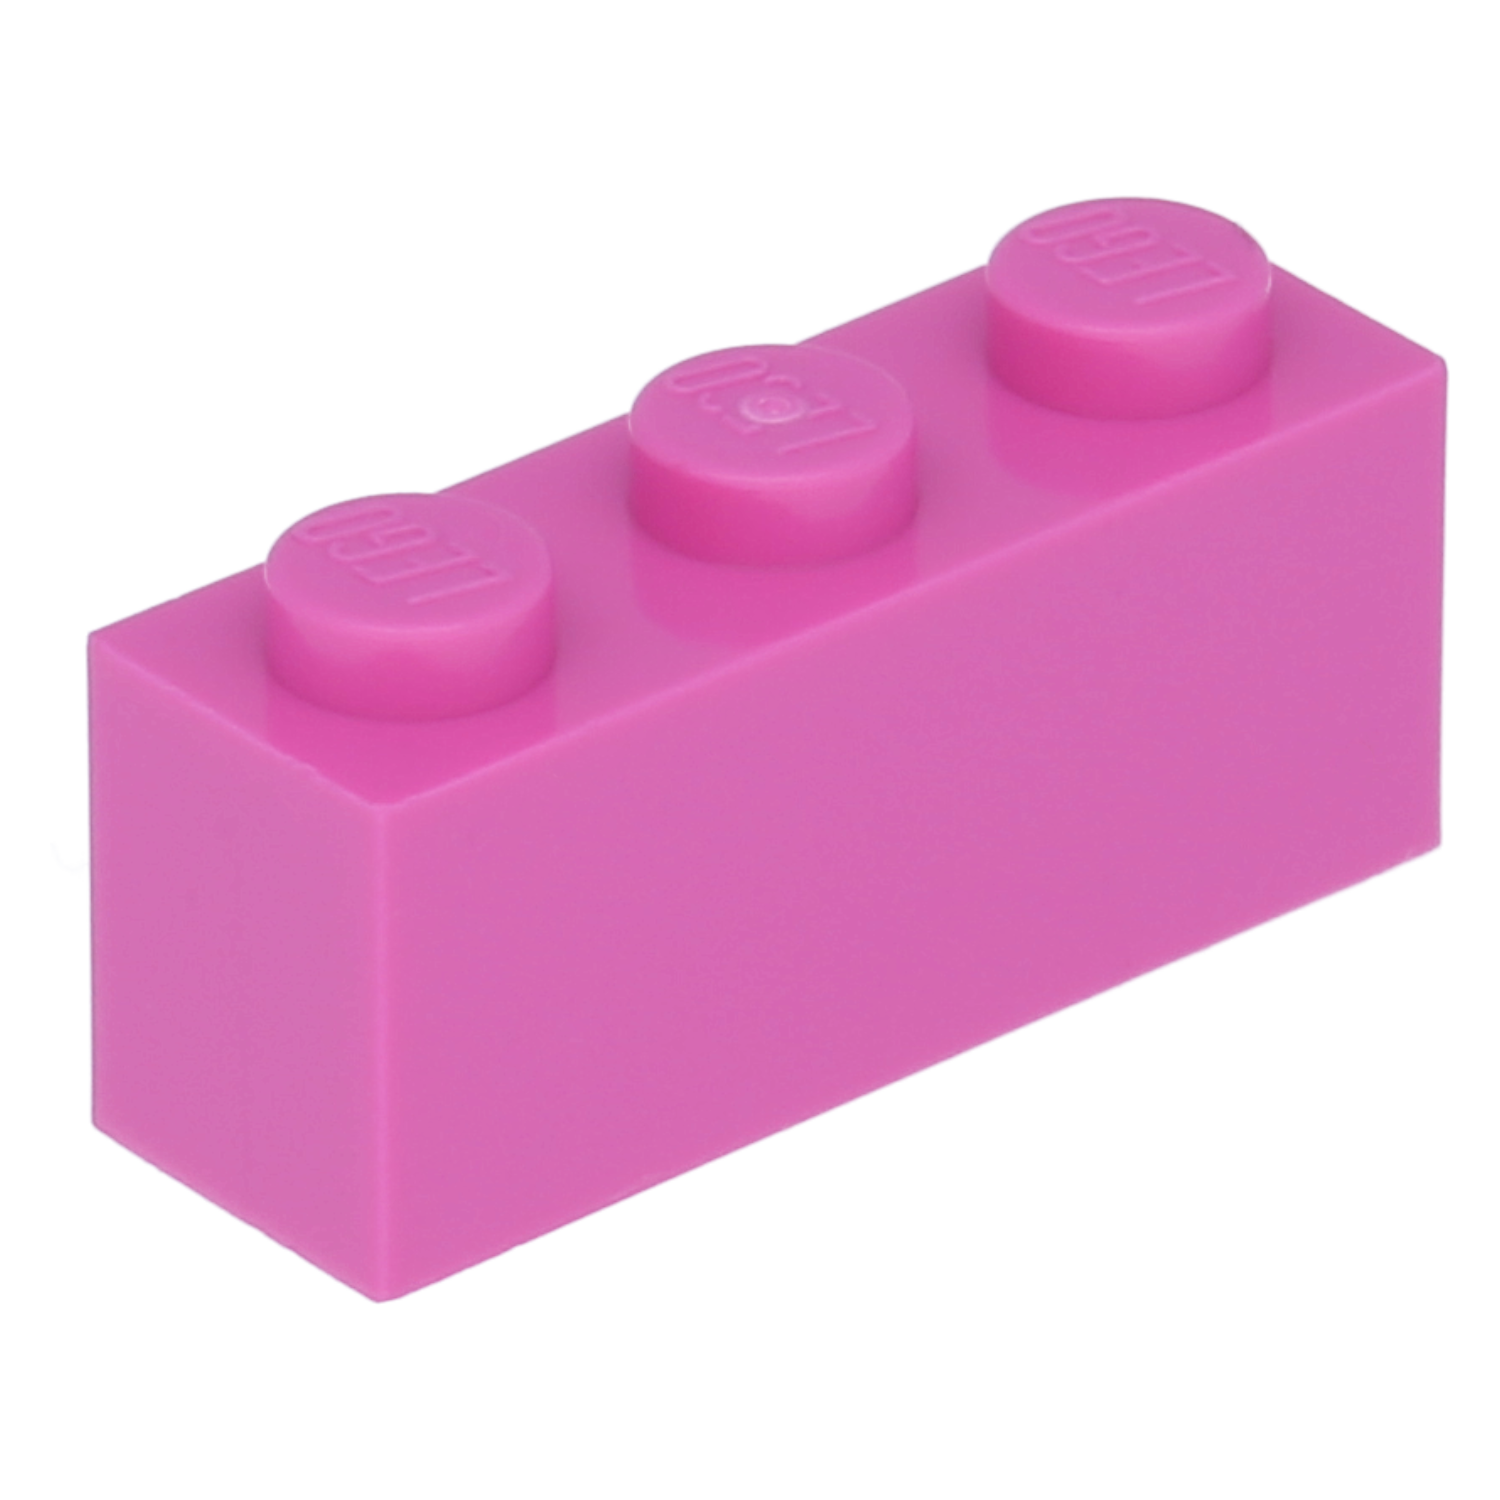 LEGO stones (standard) - 1 x 3